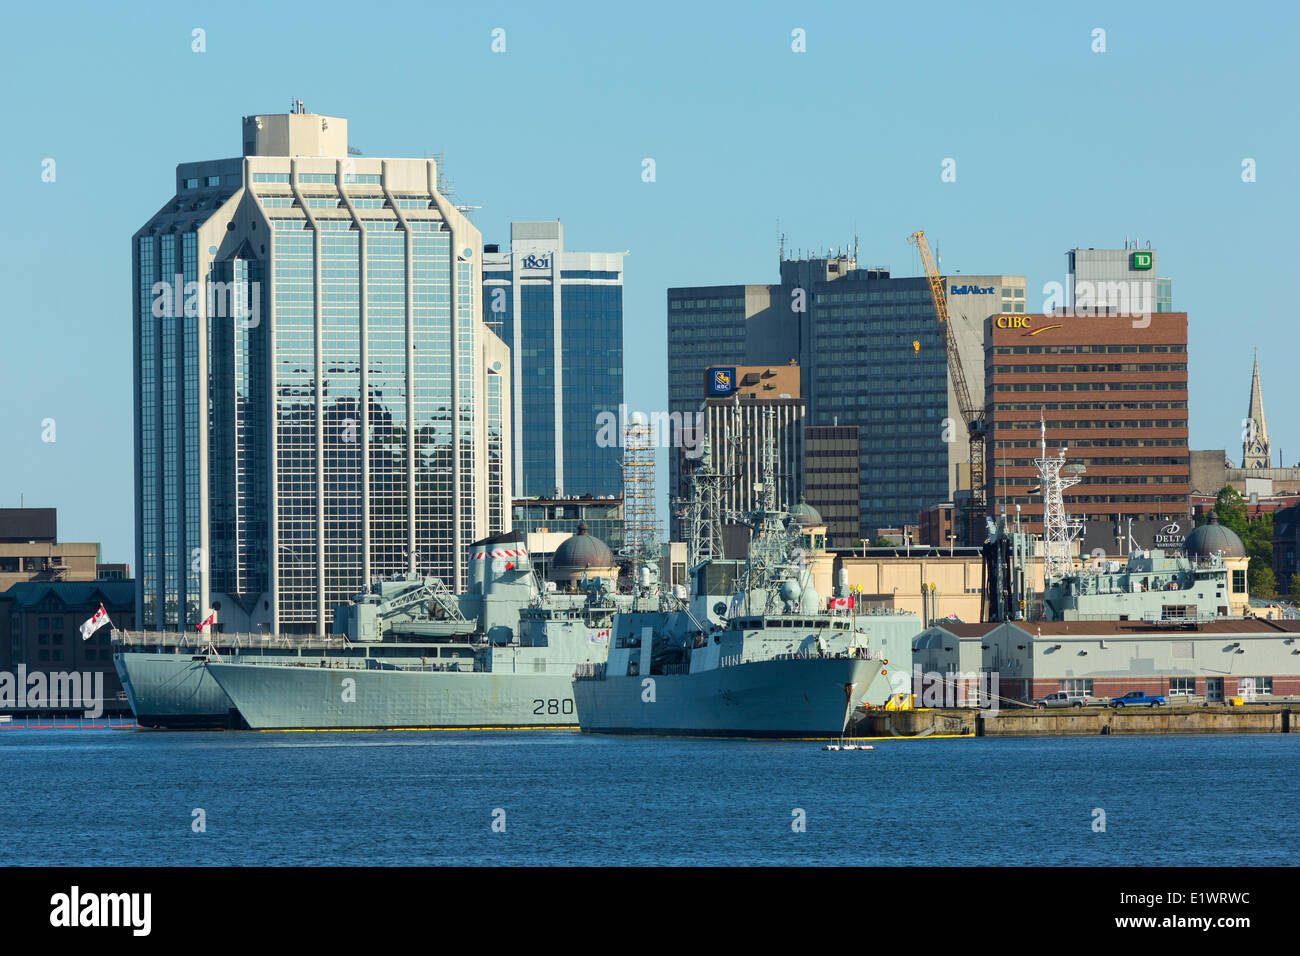 Naval ships docked at Royal Naval Dockyard, Halifax, Nova Scotia, Canada Stock Photo